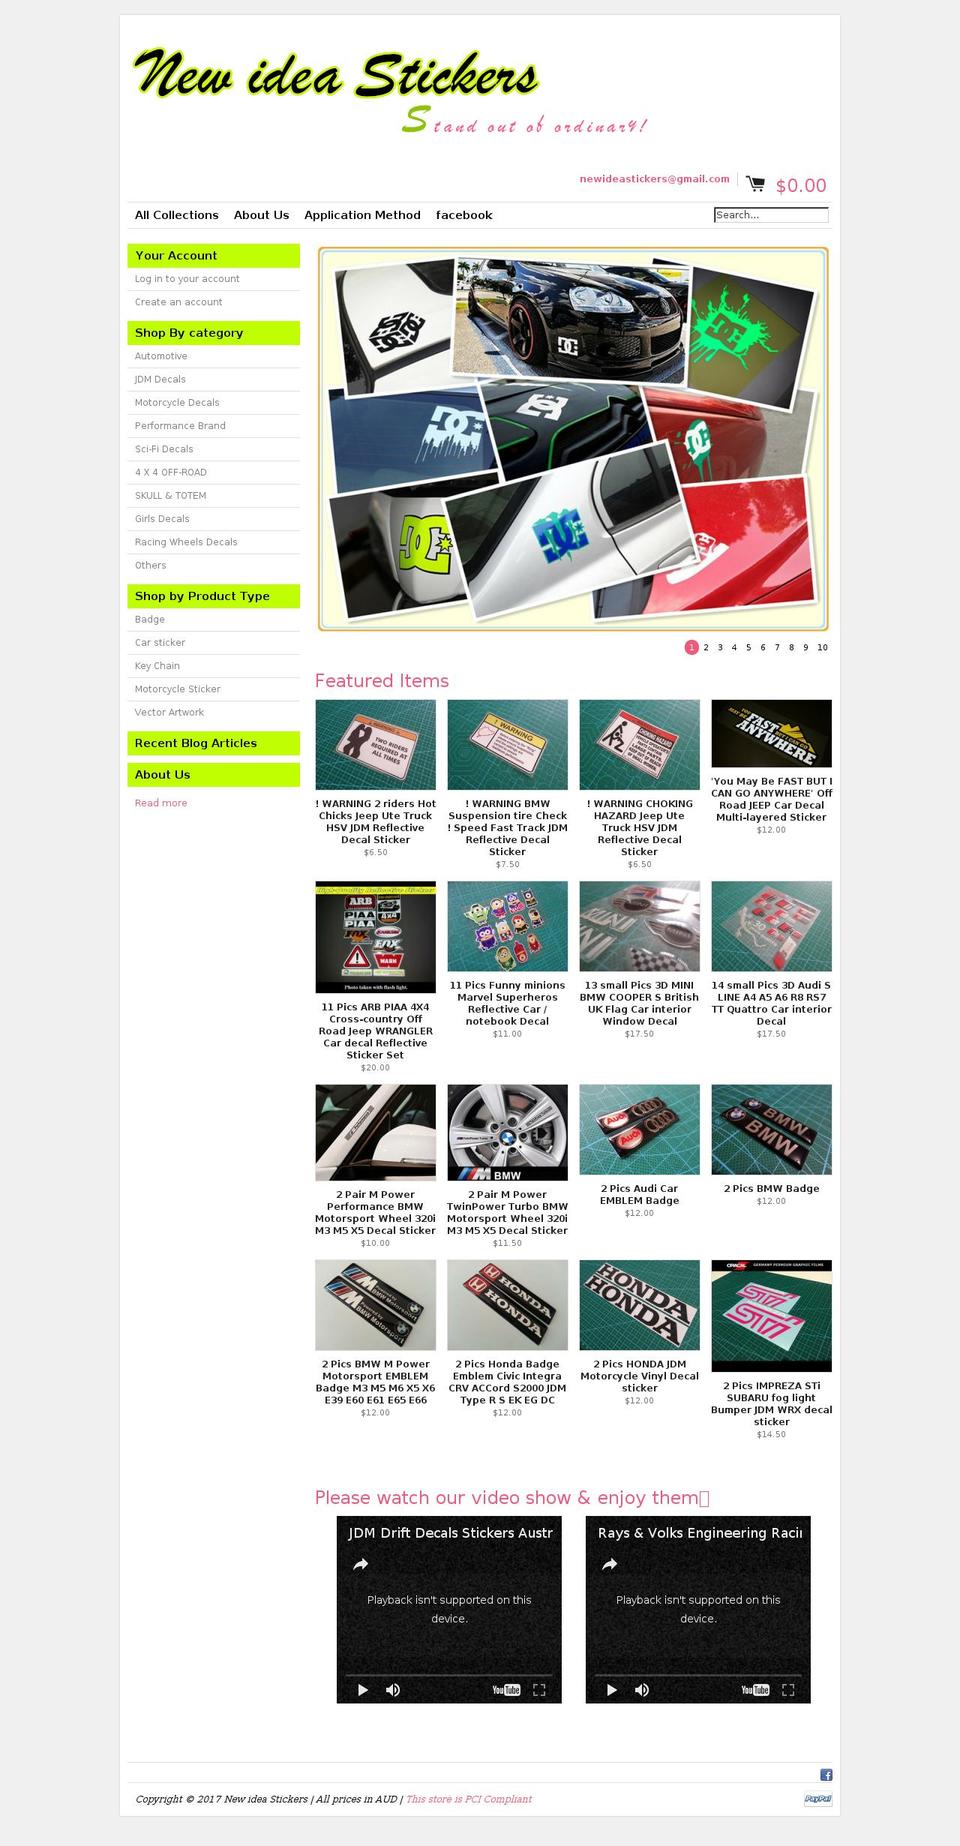 newideastickers.com shopify website screenshot